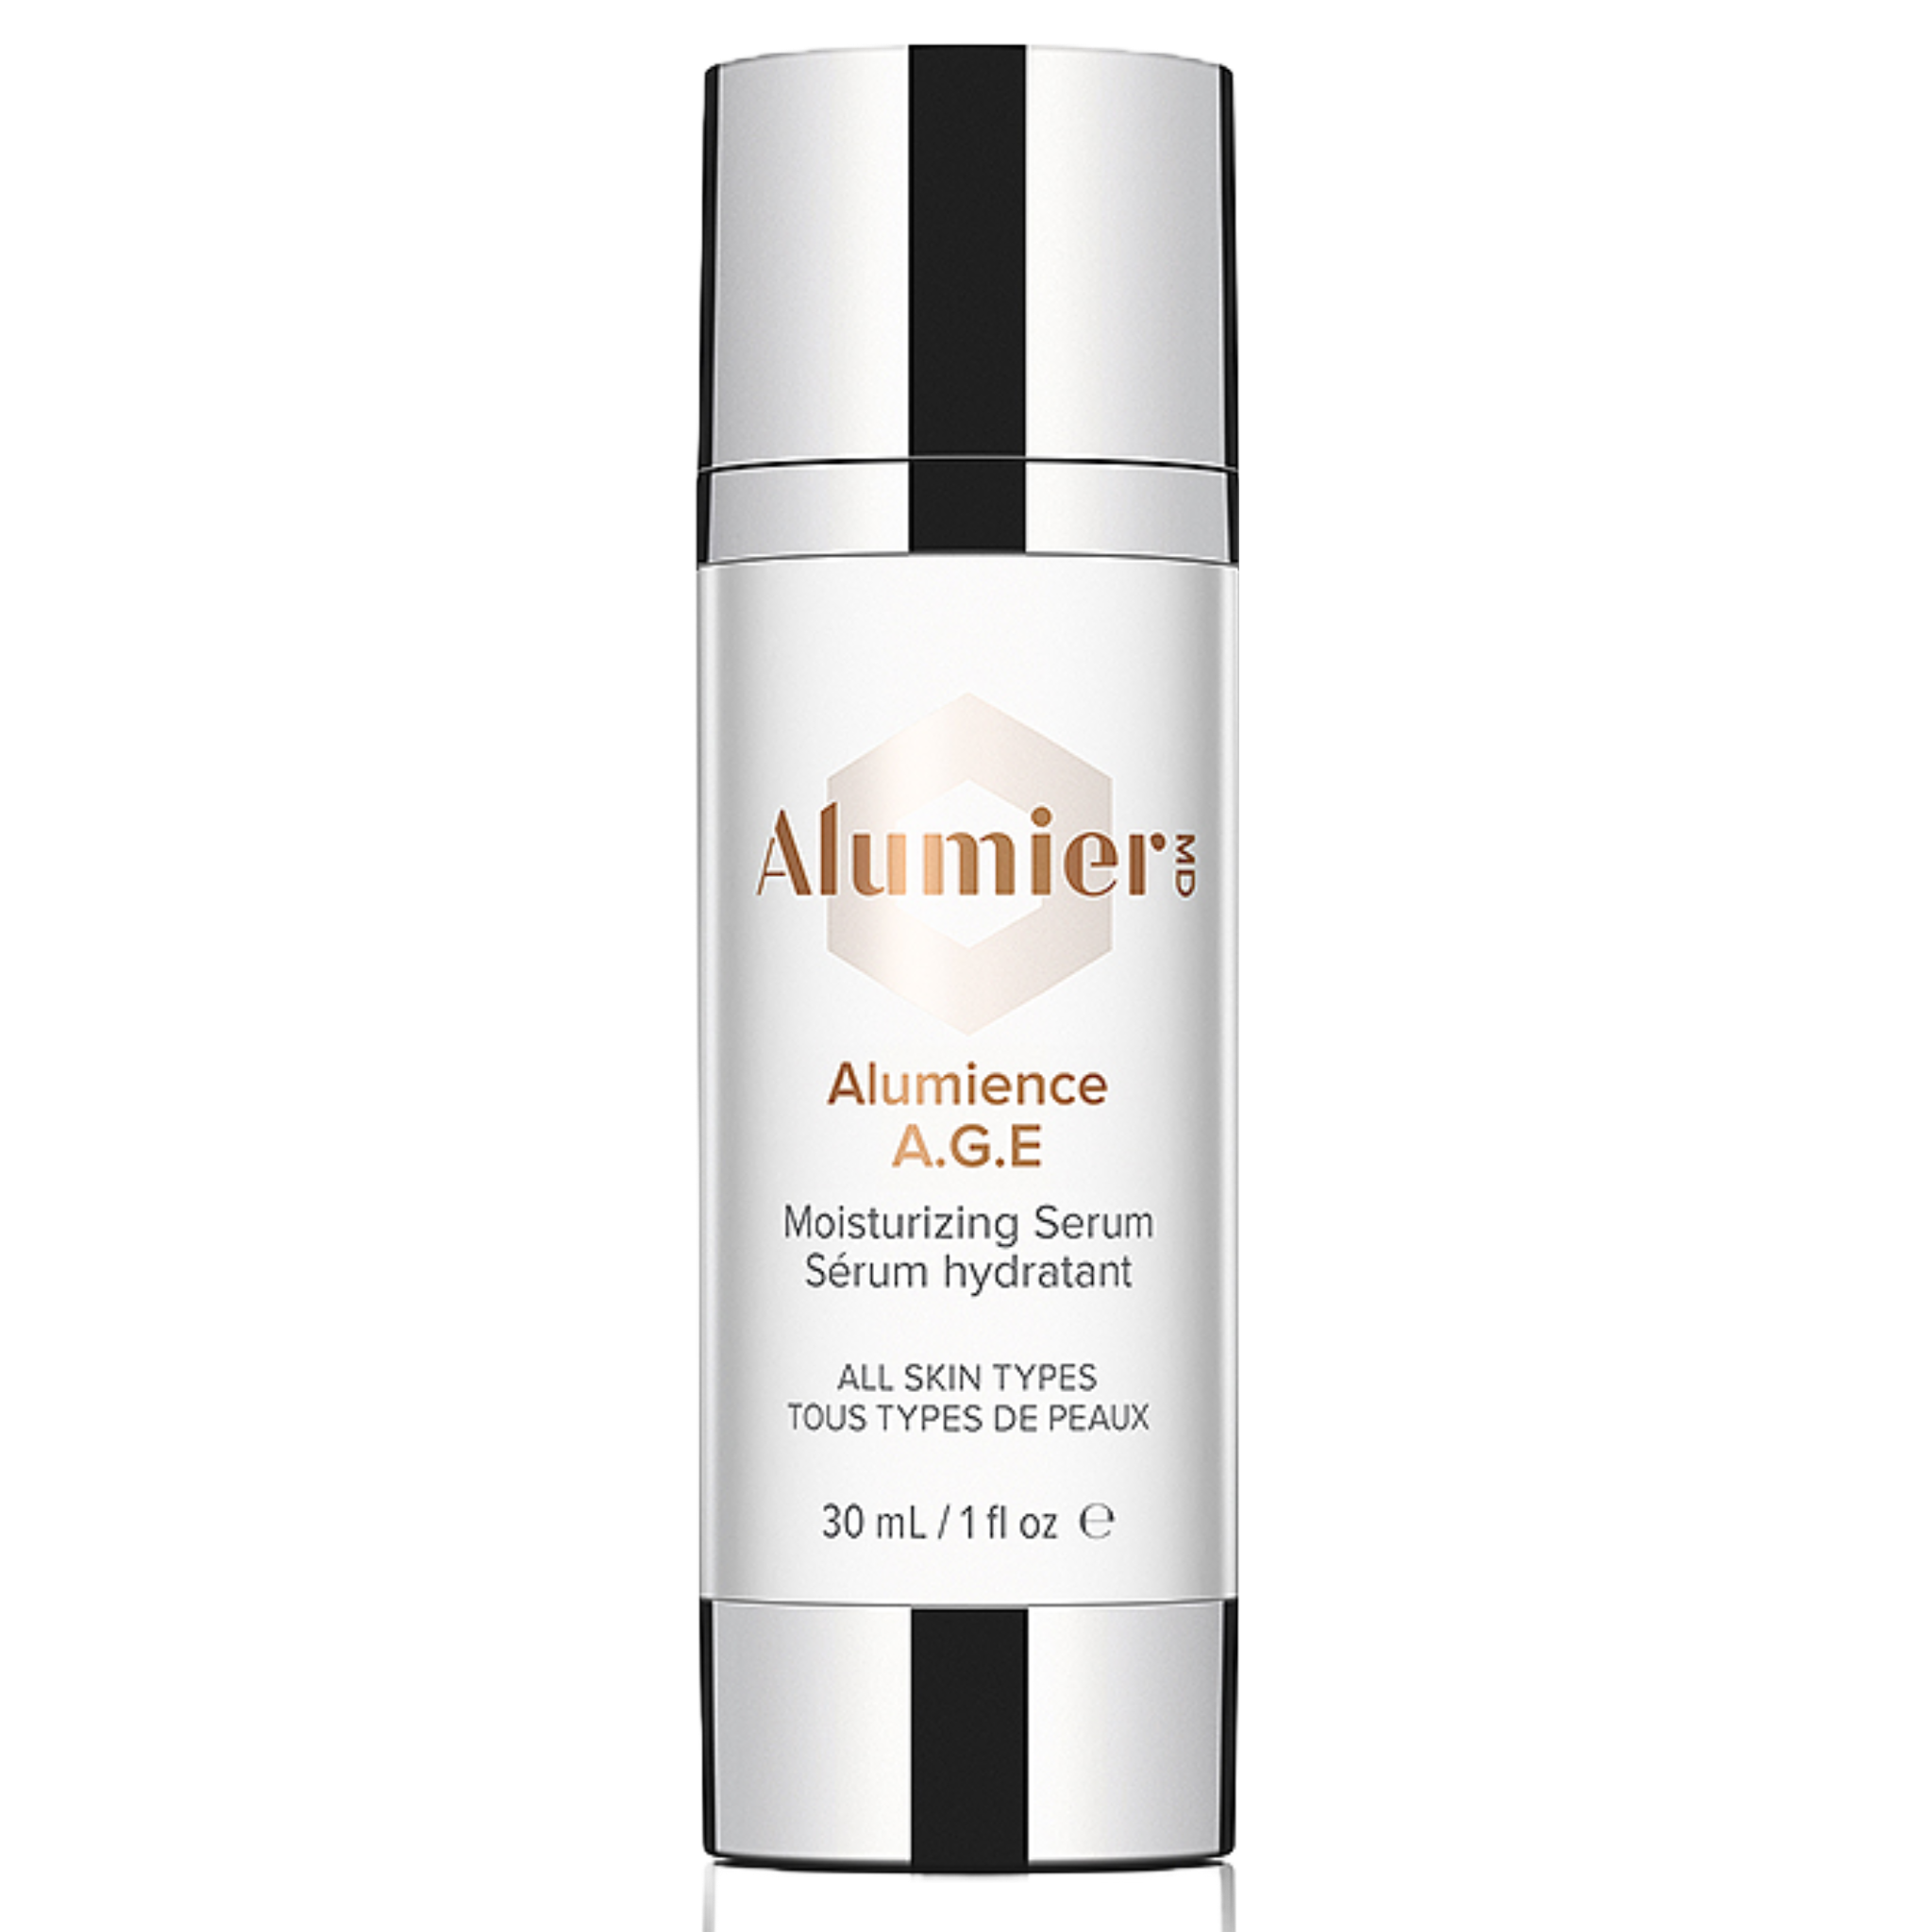 Alumier MD | Alumience A.G.E. (30ml)